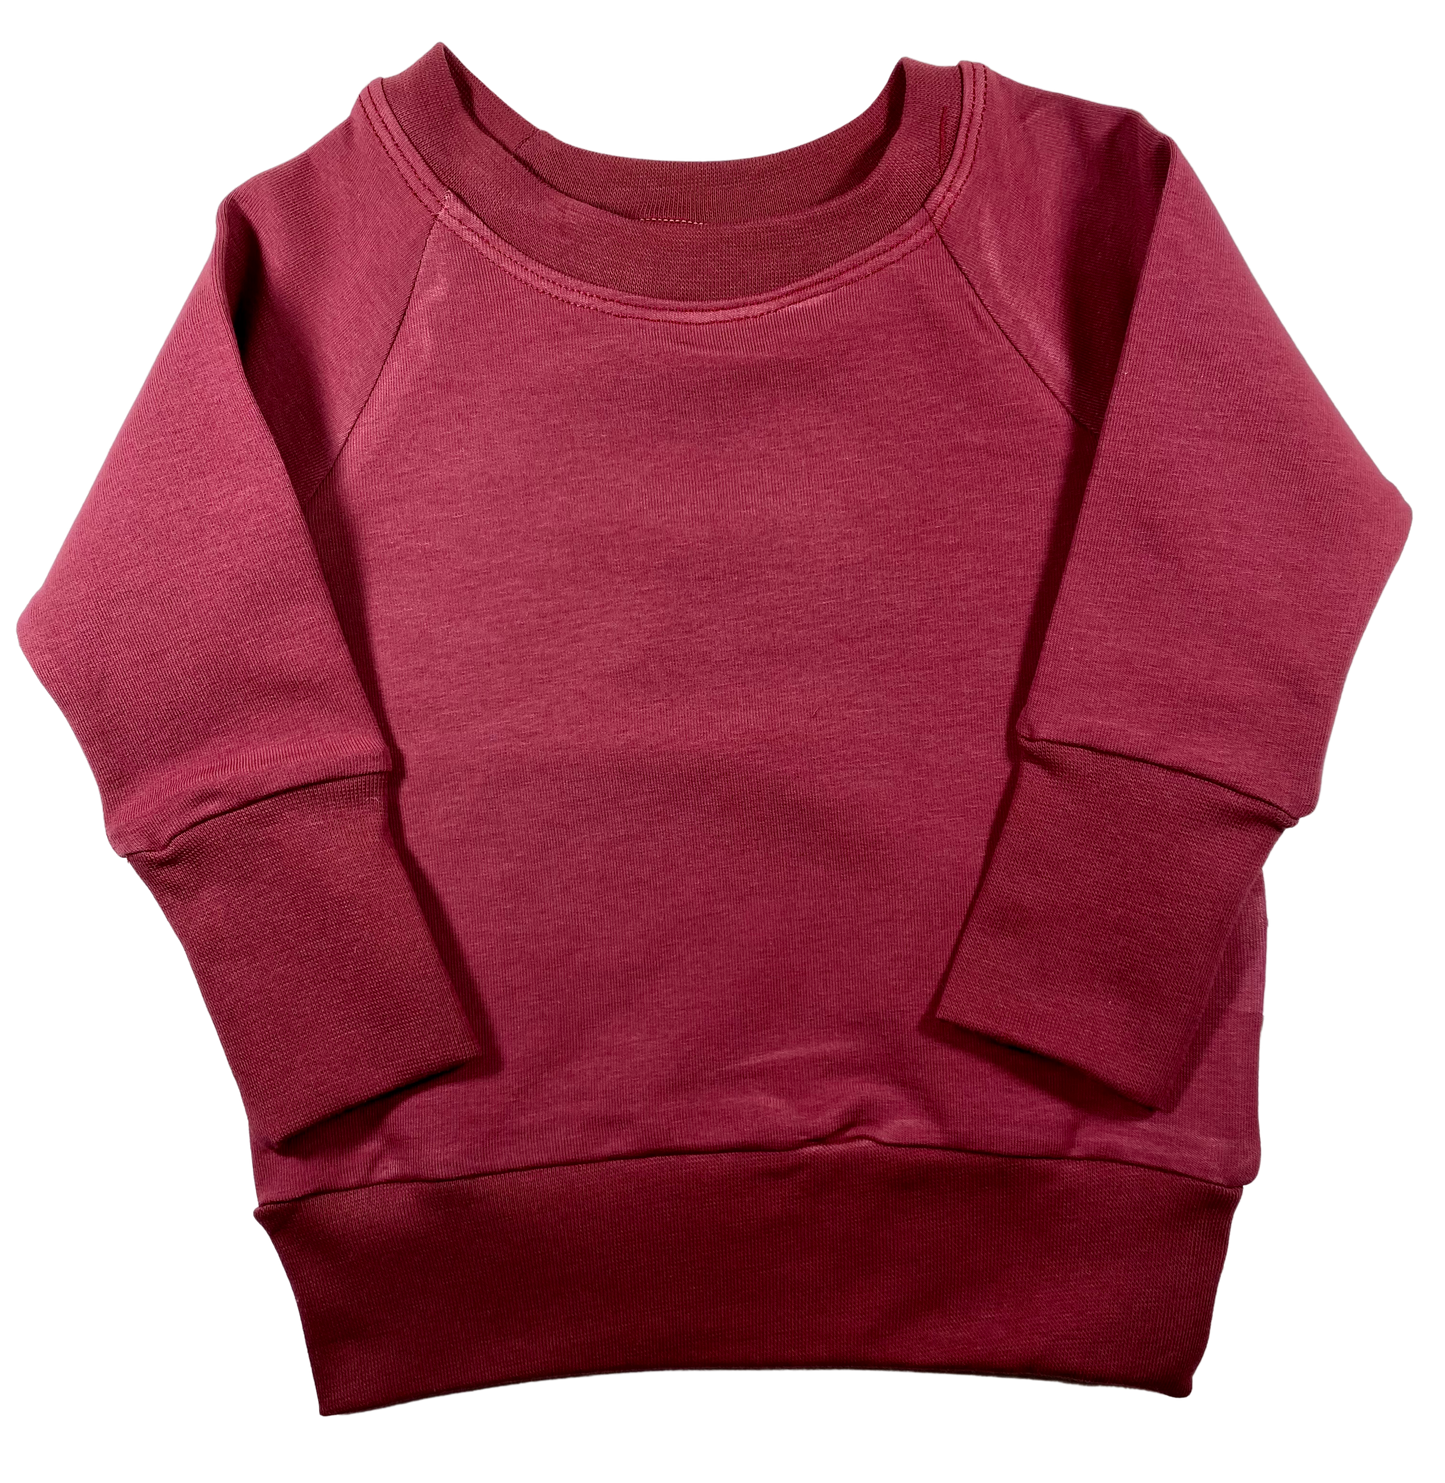 Burgundy Growth Spurt Crew Neck Sweater Basic Coordinates Colours